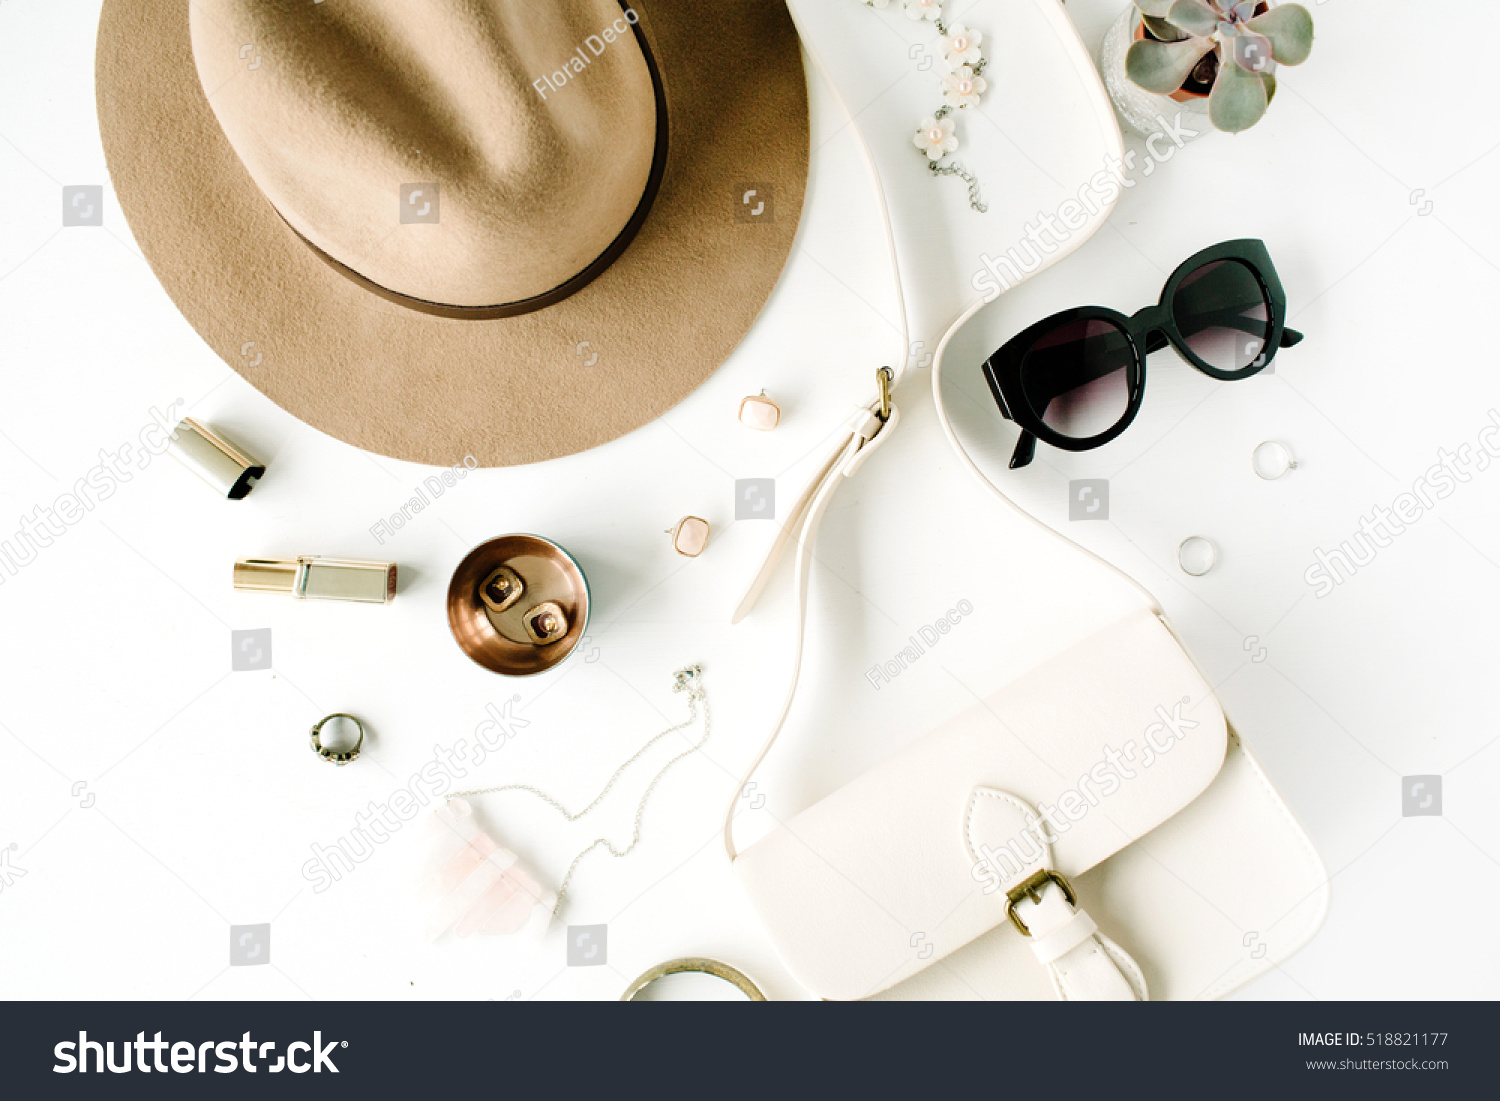 Flat lay trendy creative feminine accessories arrangement. Purse, hat, sunglasses, female accessories. Top view #518821177